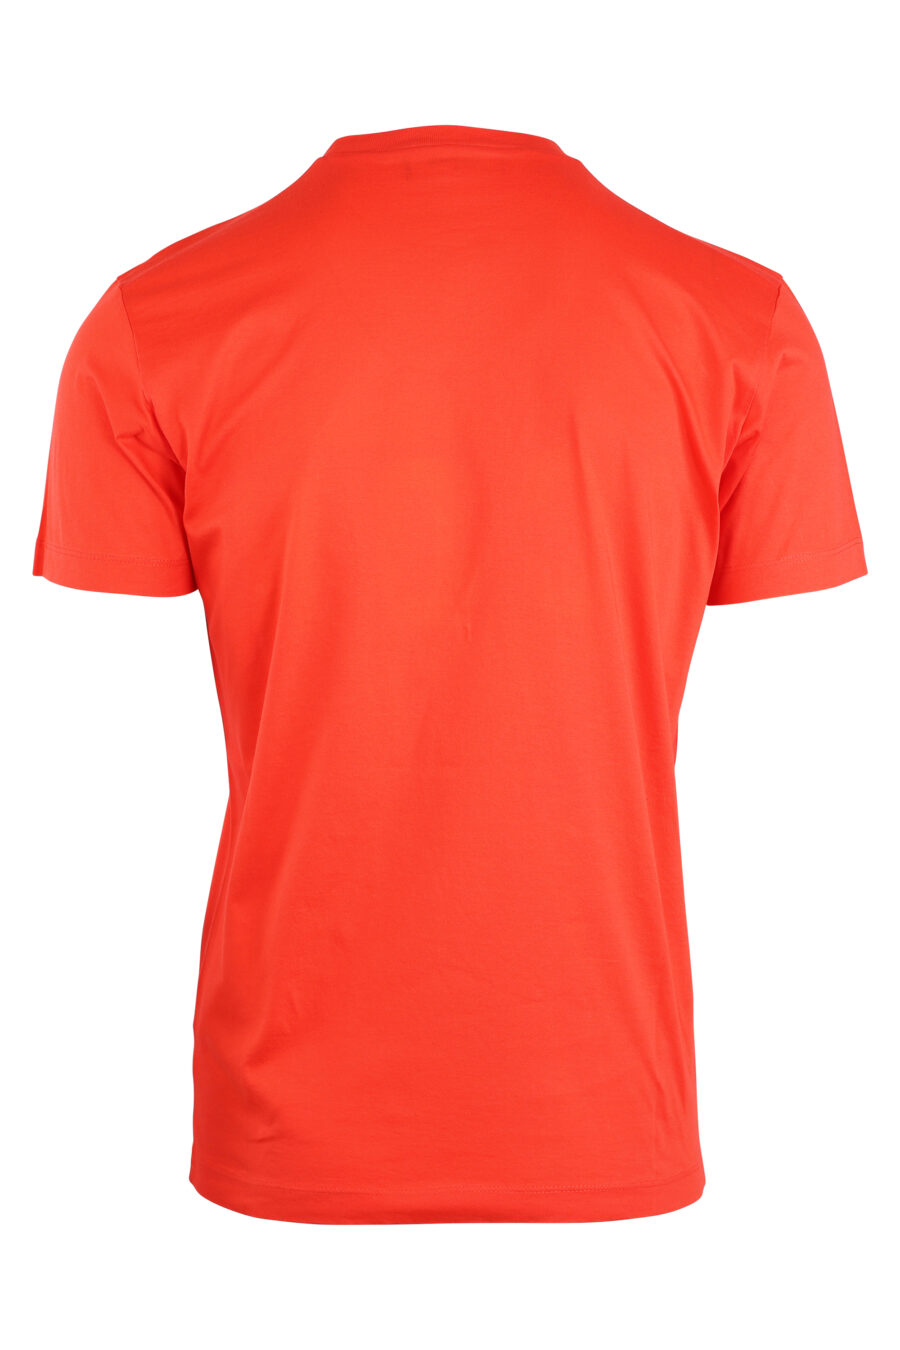 T-shirt laranja com logótipo duplo "ícone" - IMG 8929